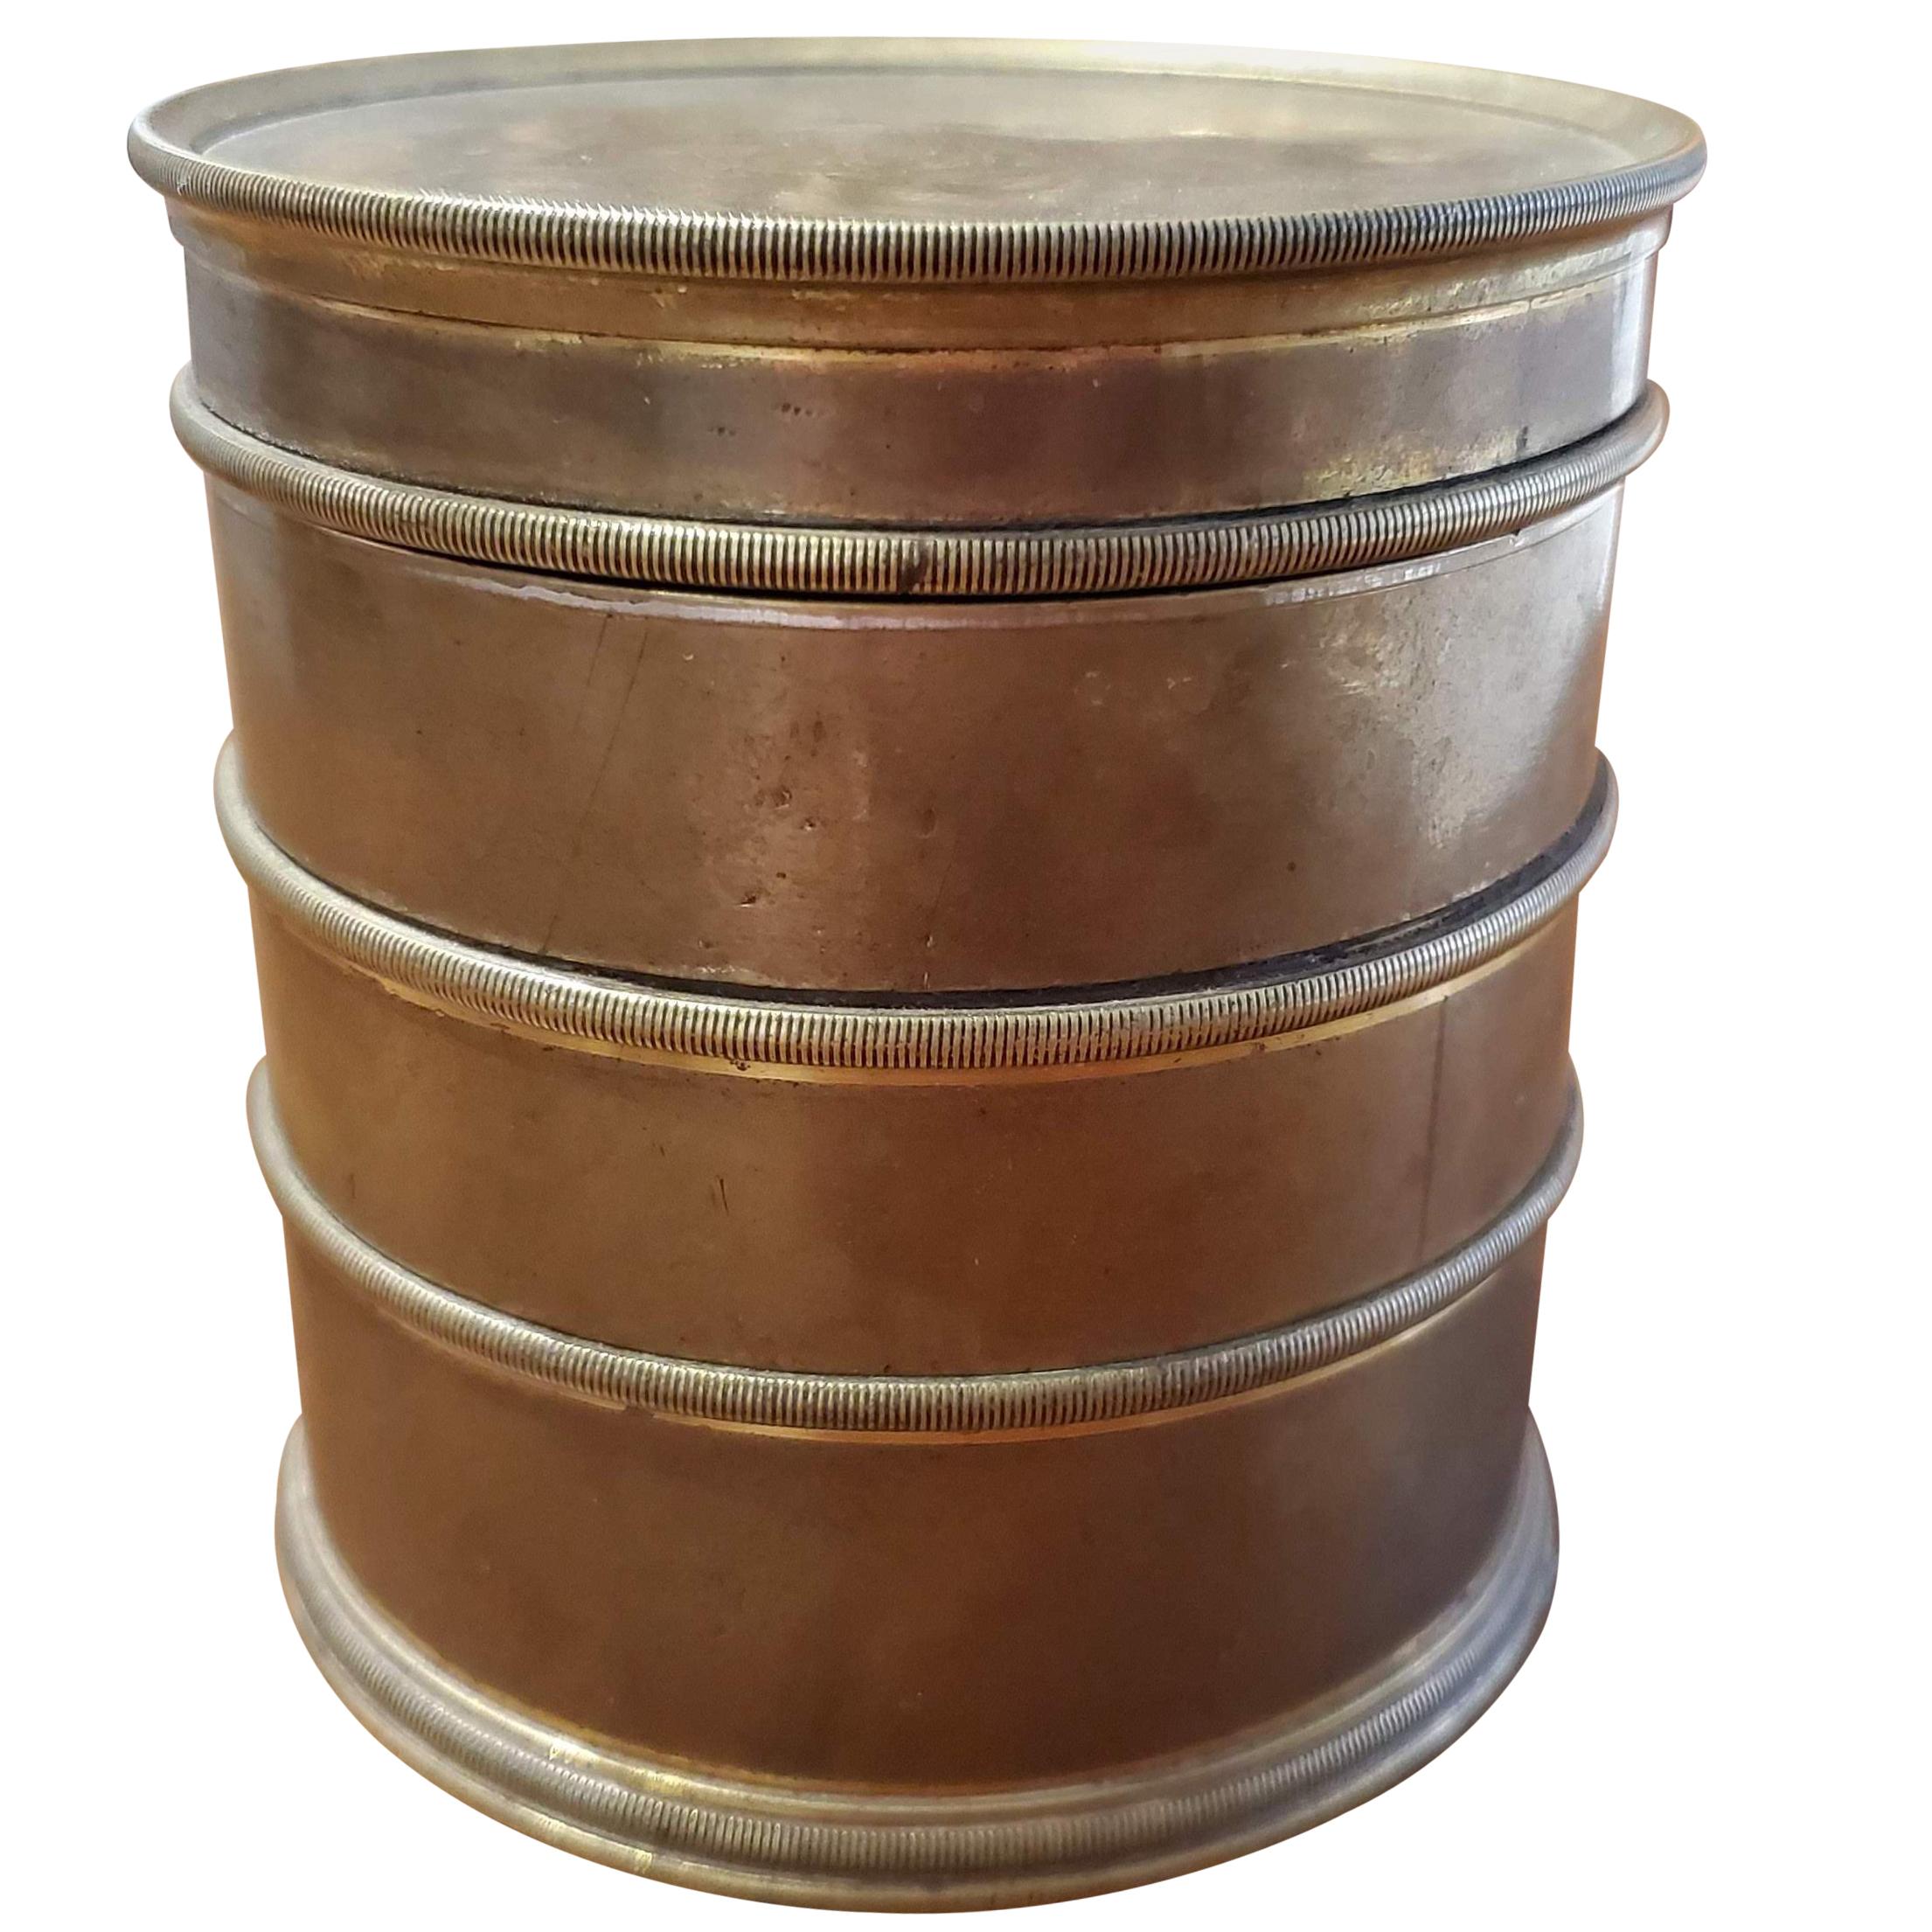 Unusual Cylindrical Shaped Brass Tobacco Box